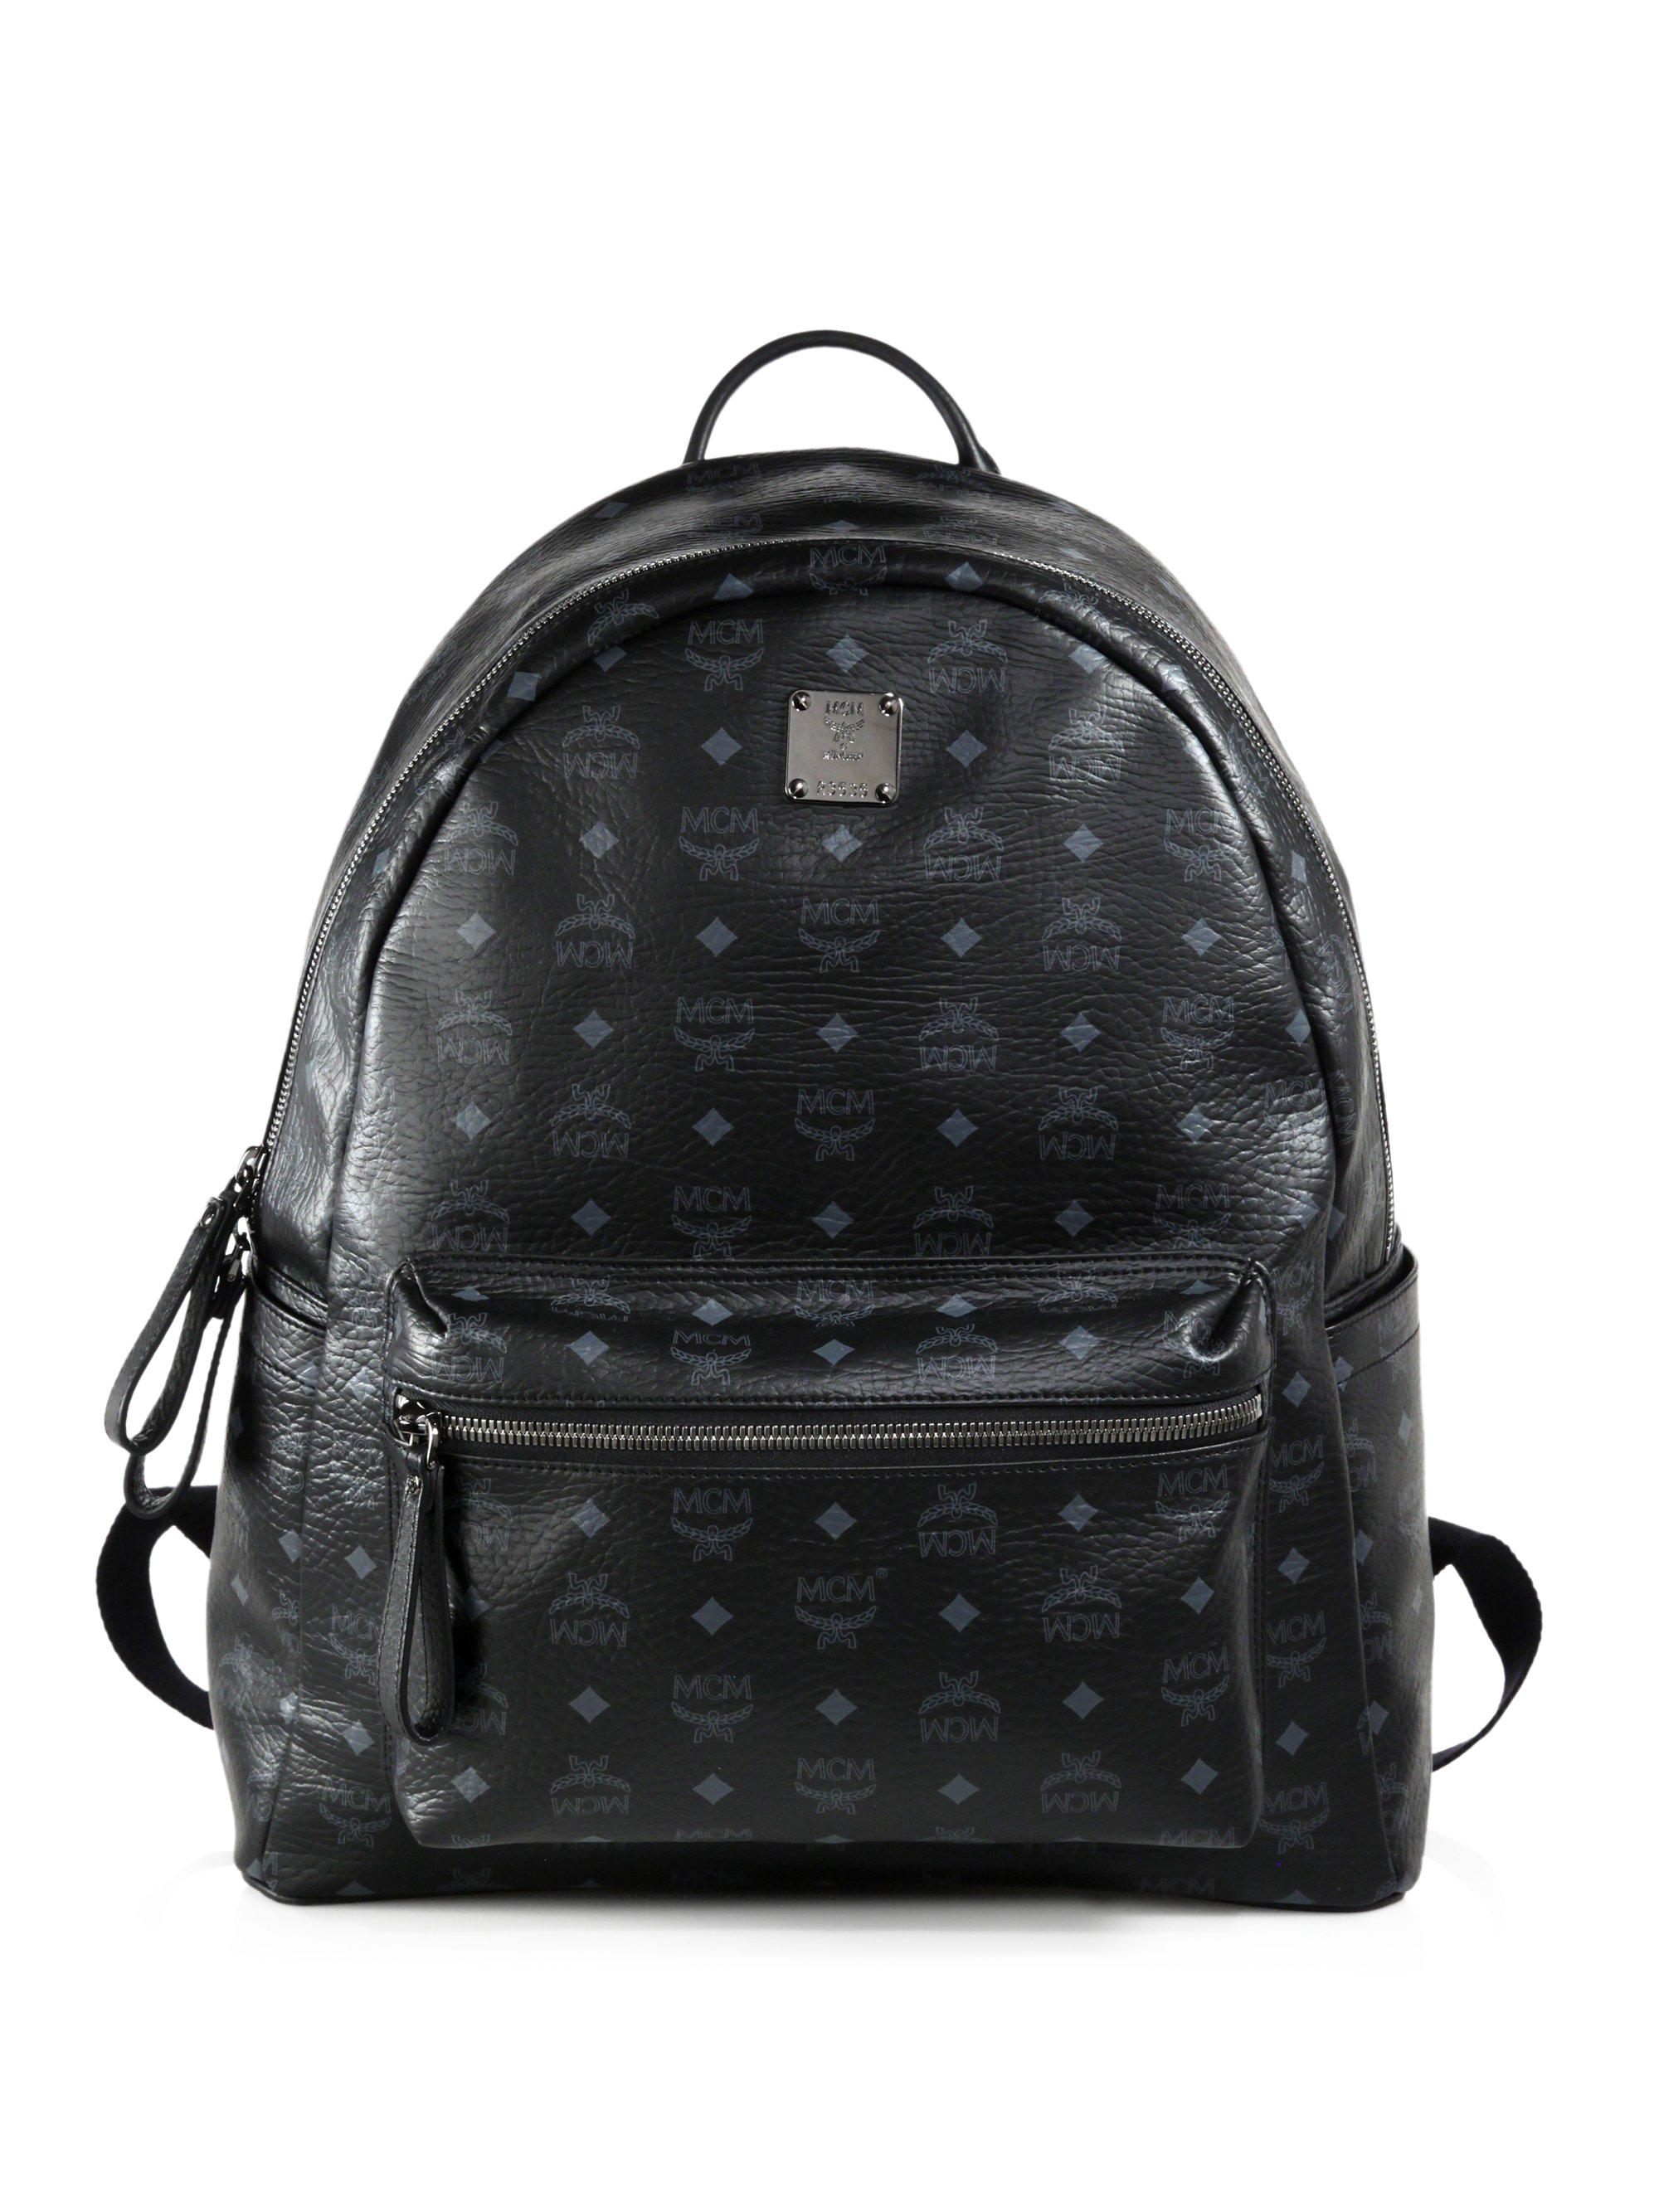 Lyst - Mcm Stark Backpack in Black for Men - Save 4%